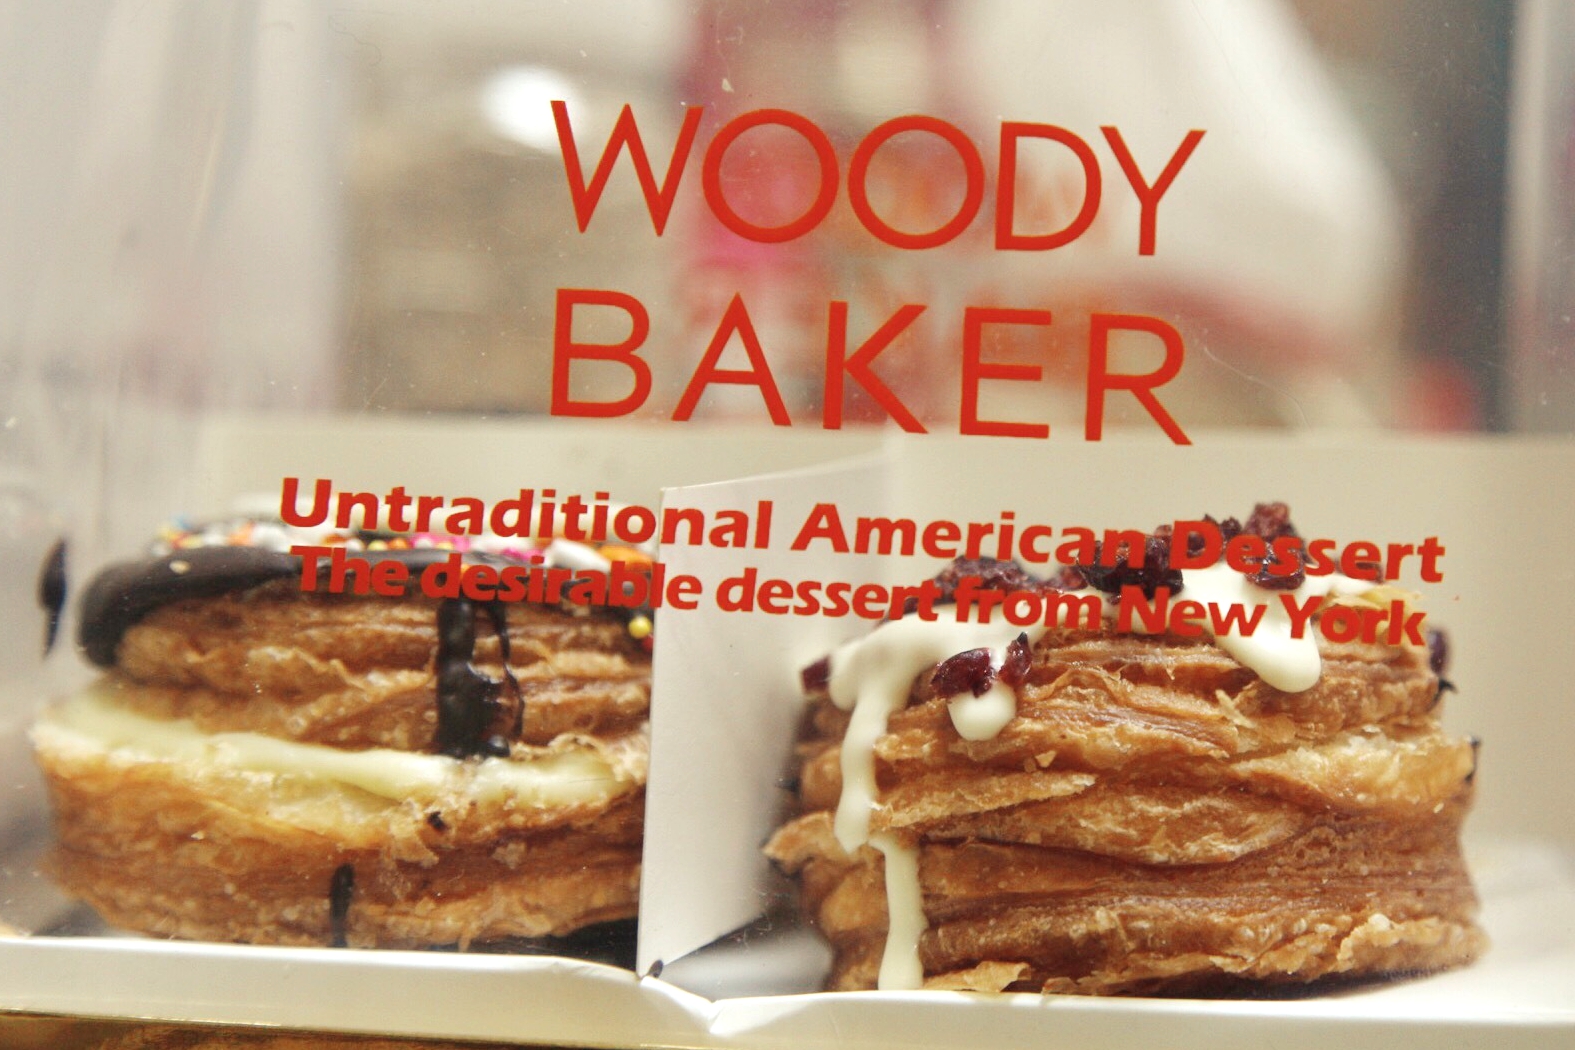 woody baker沃倍可